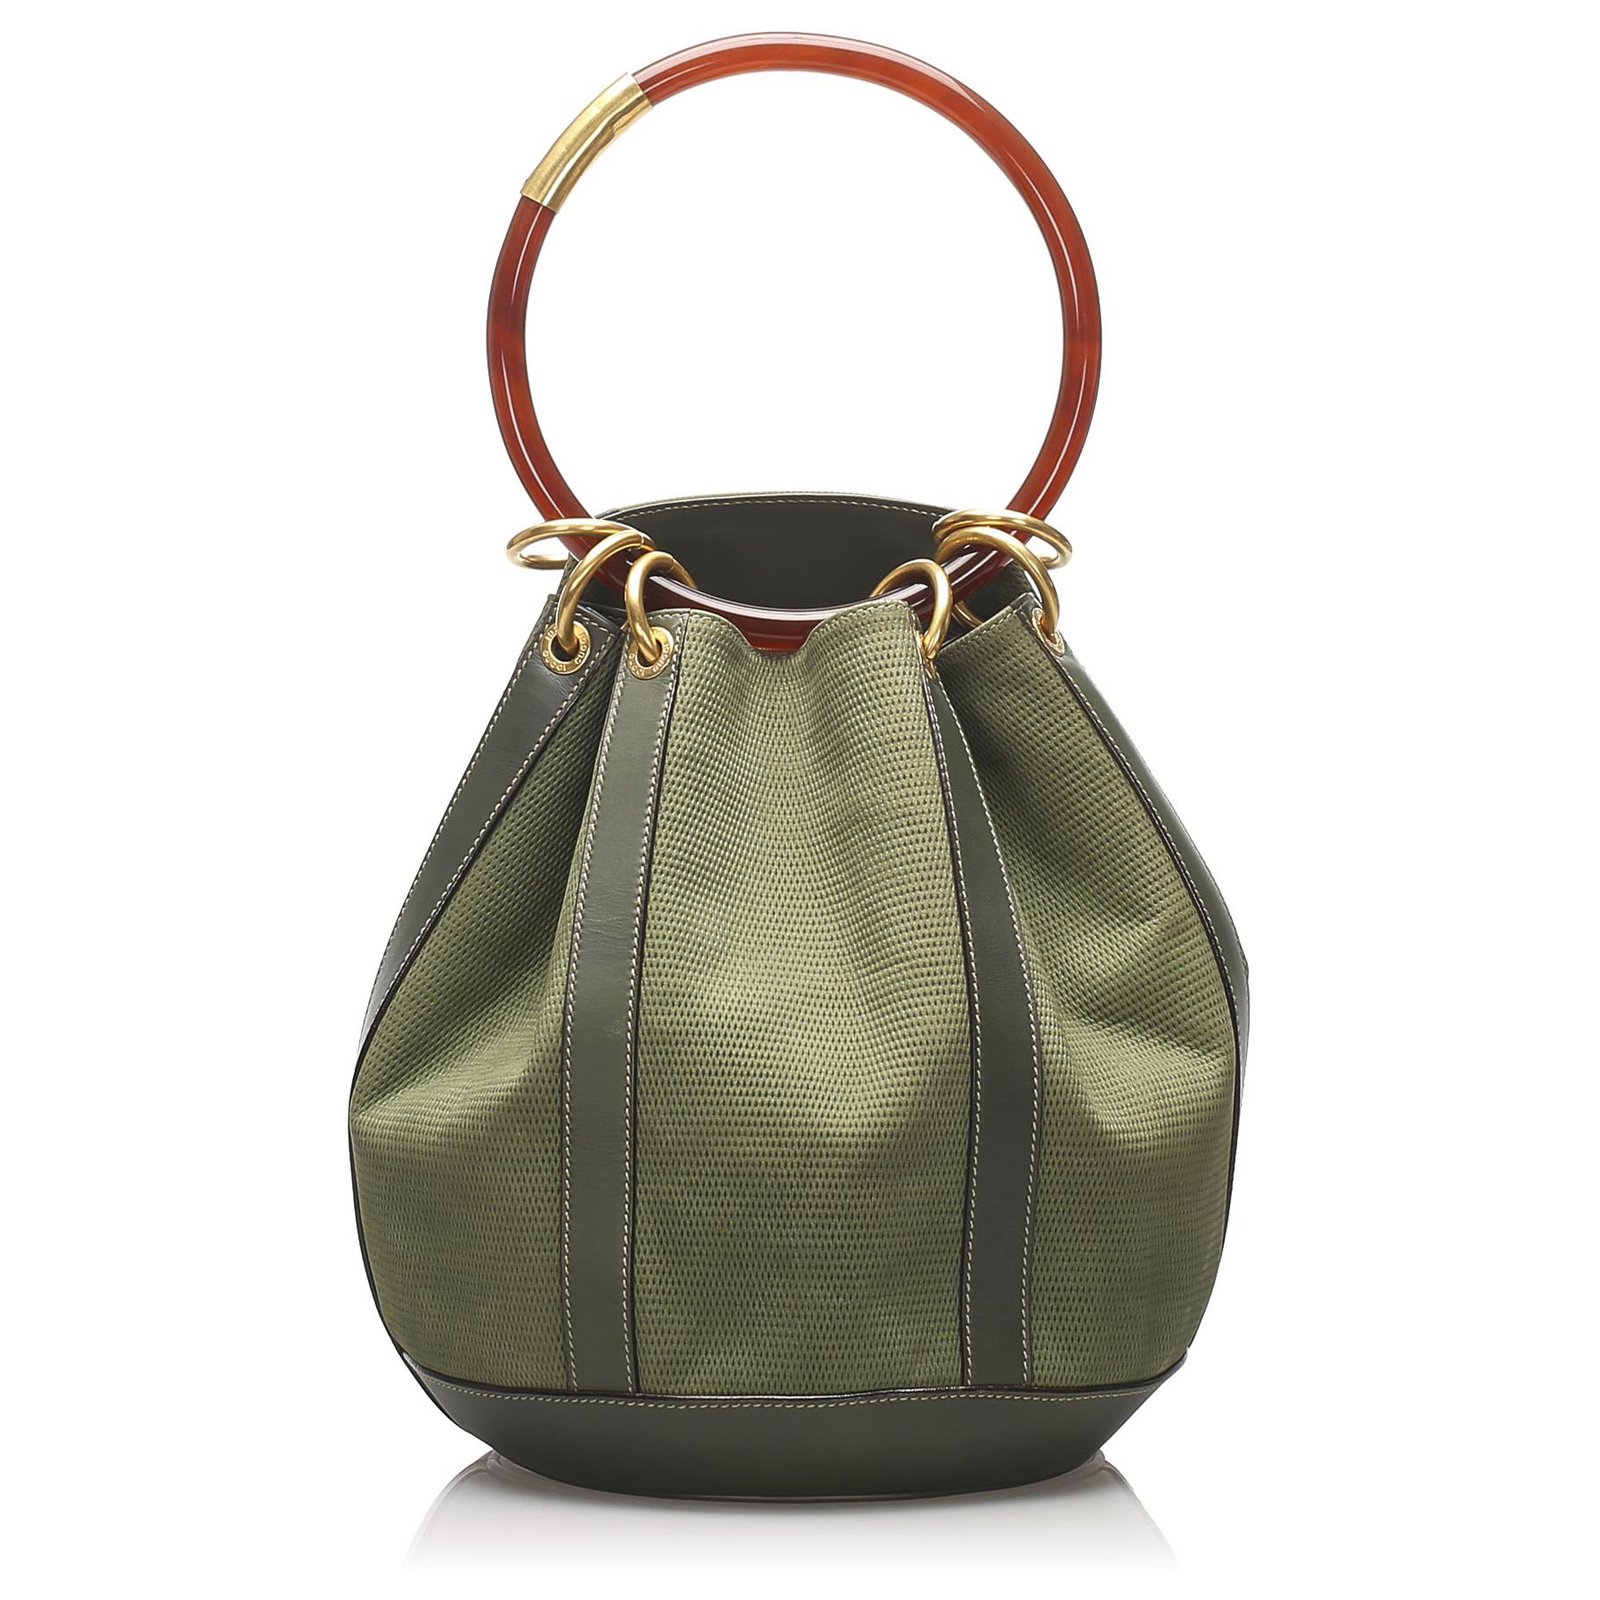 gucci style handbags